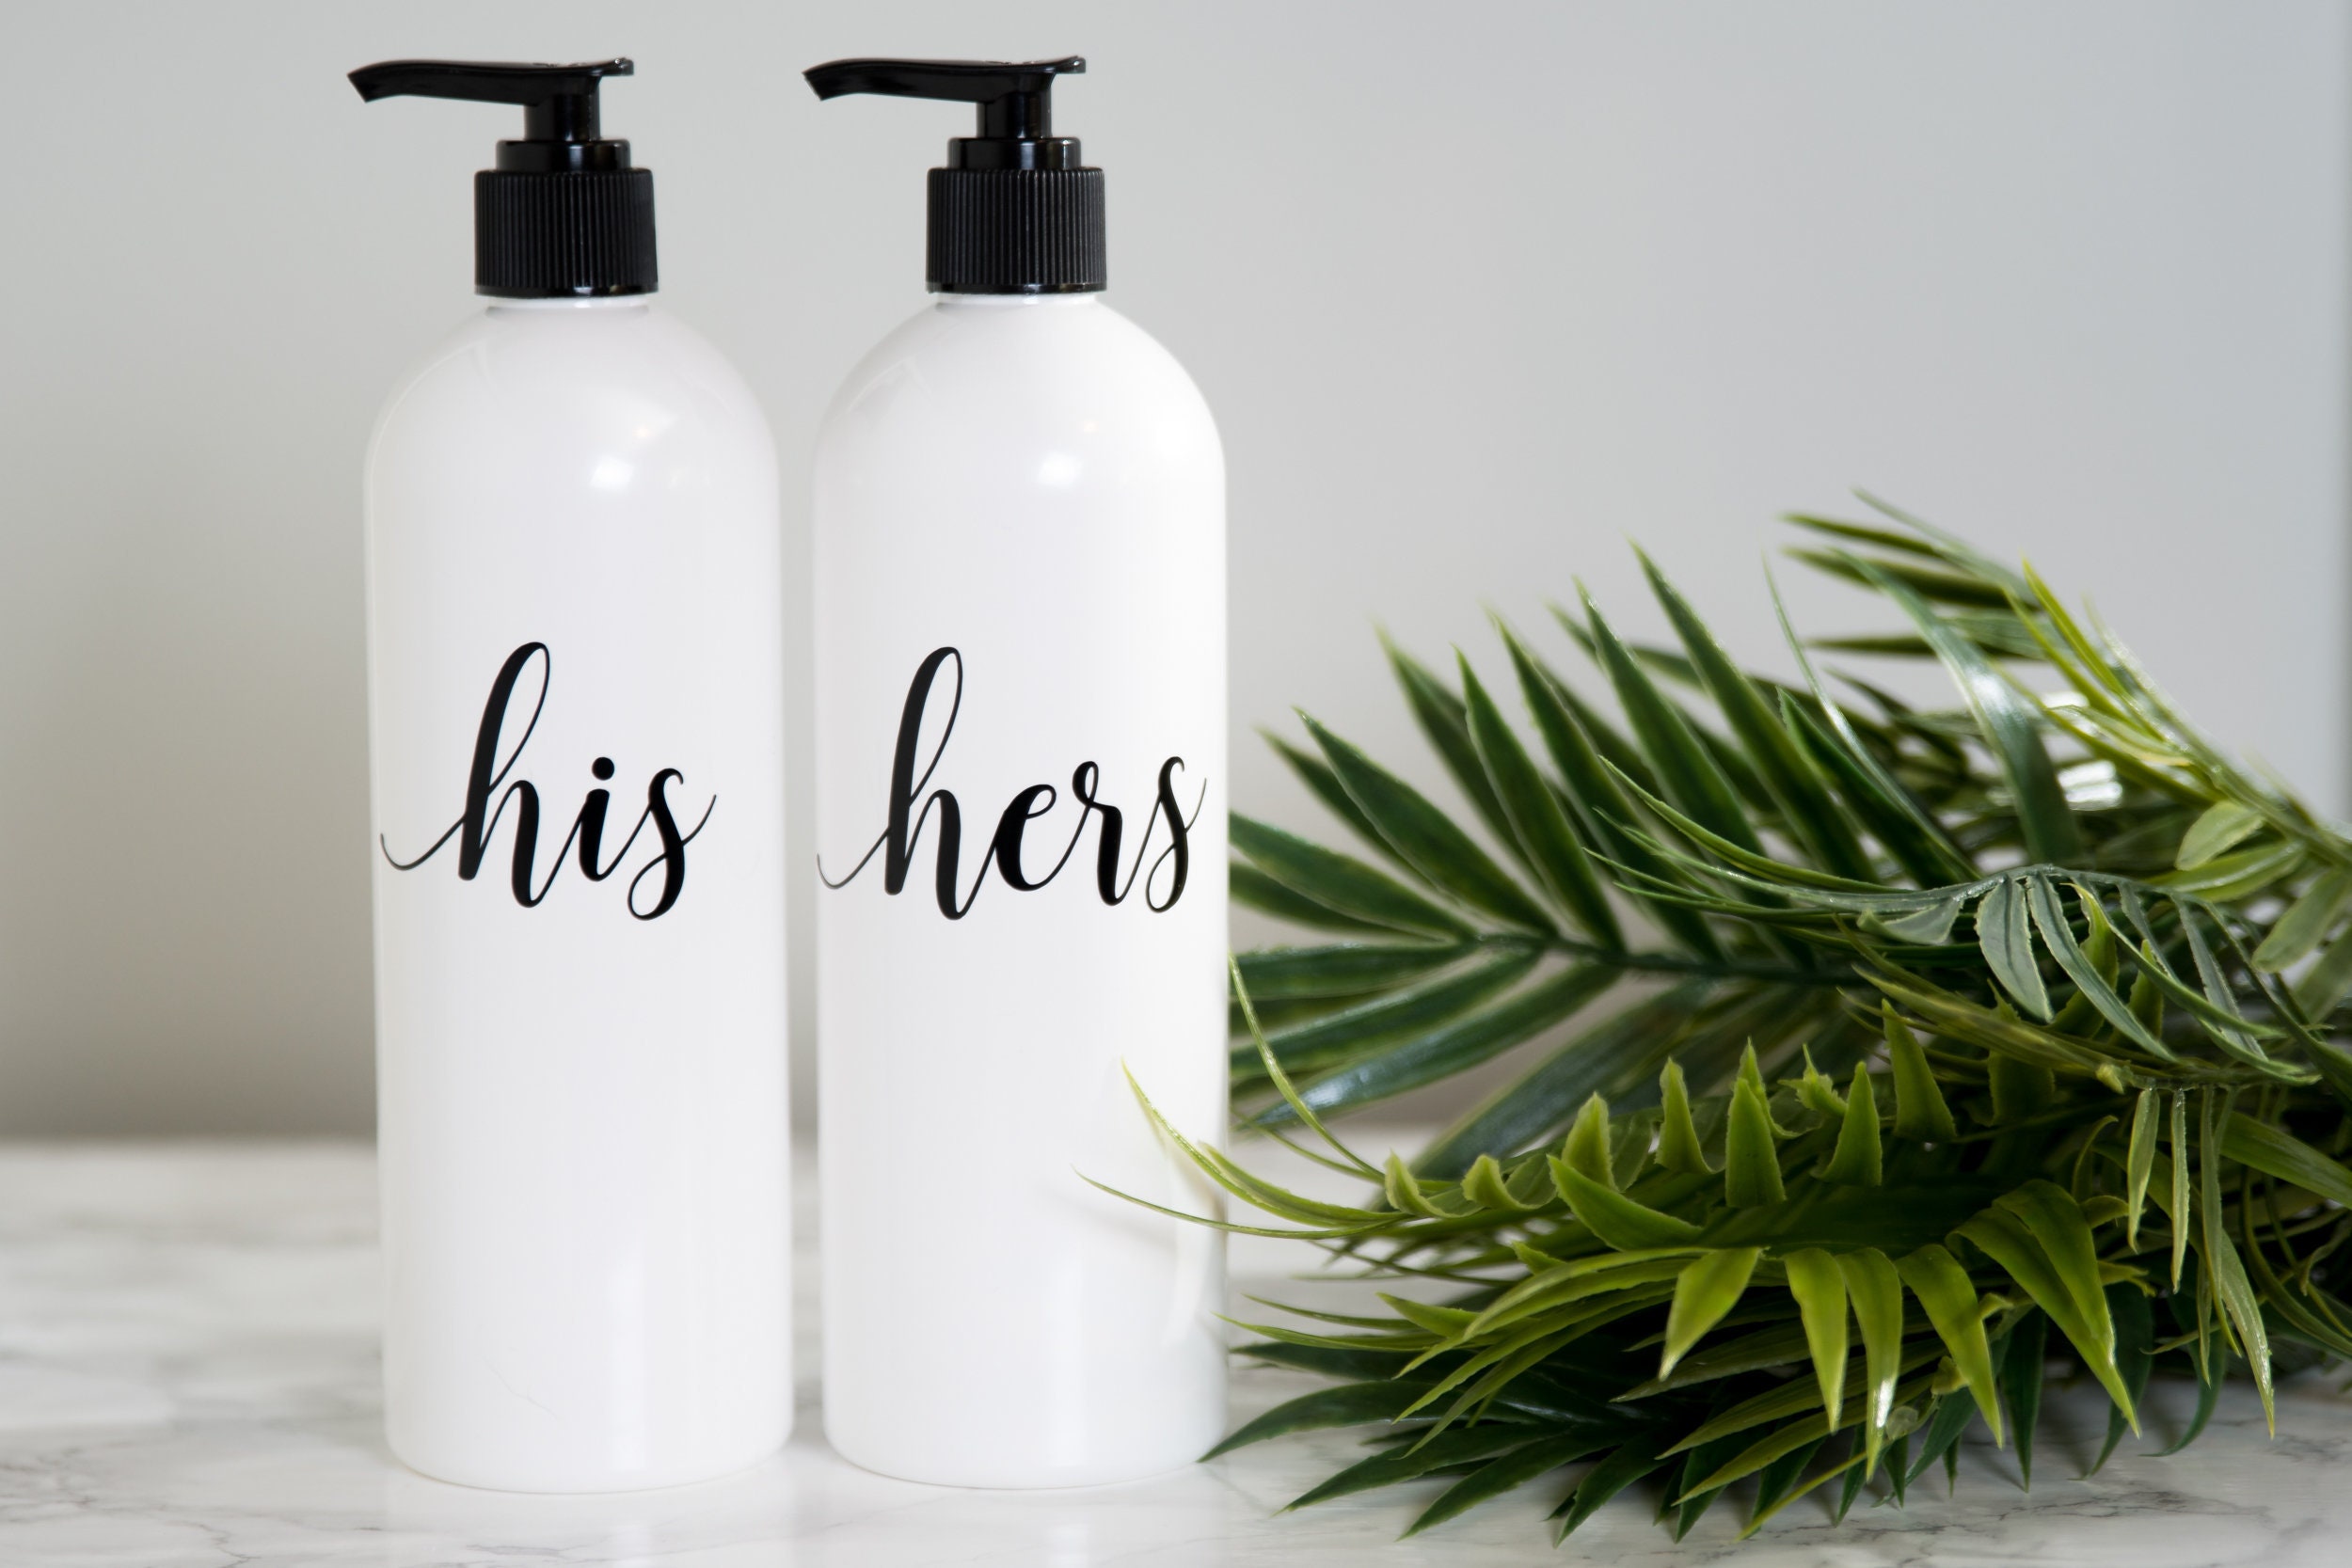 Gorgeous wife inserts shampoo bottle fan images